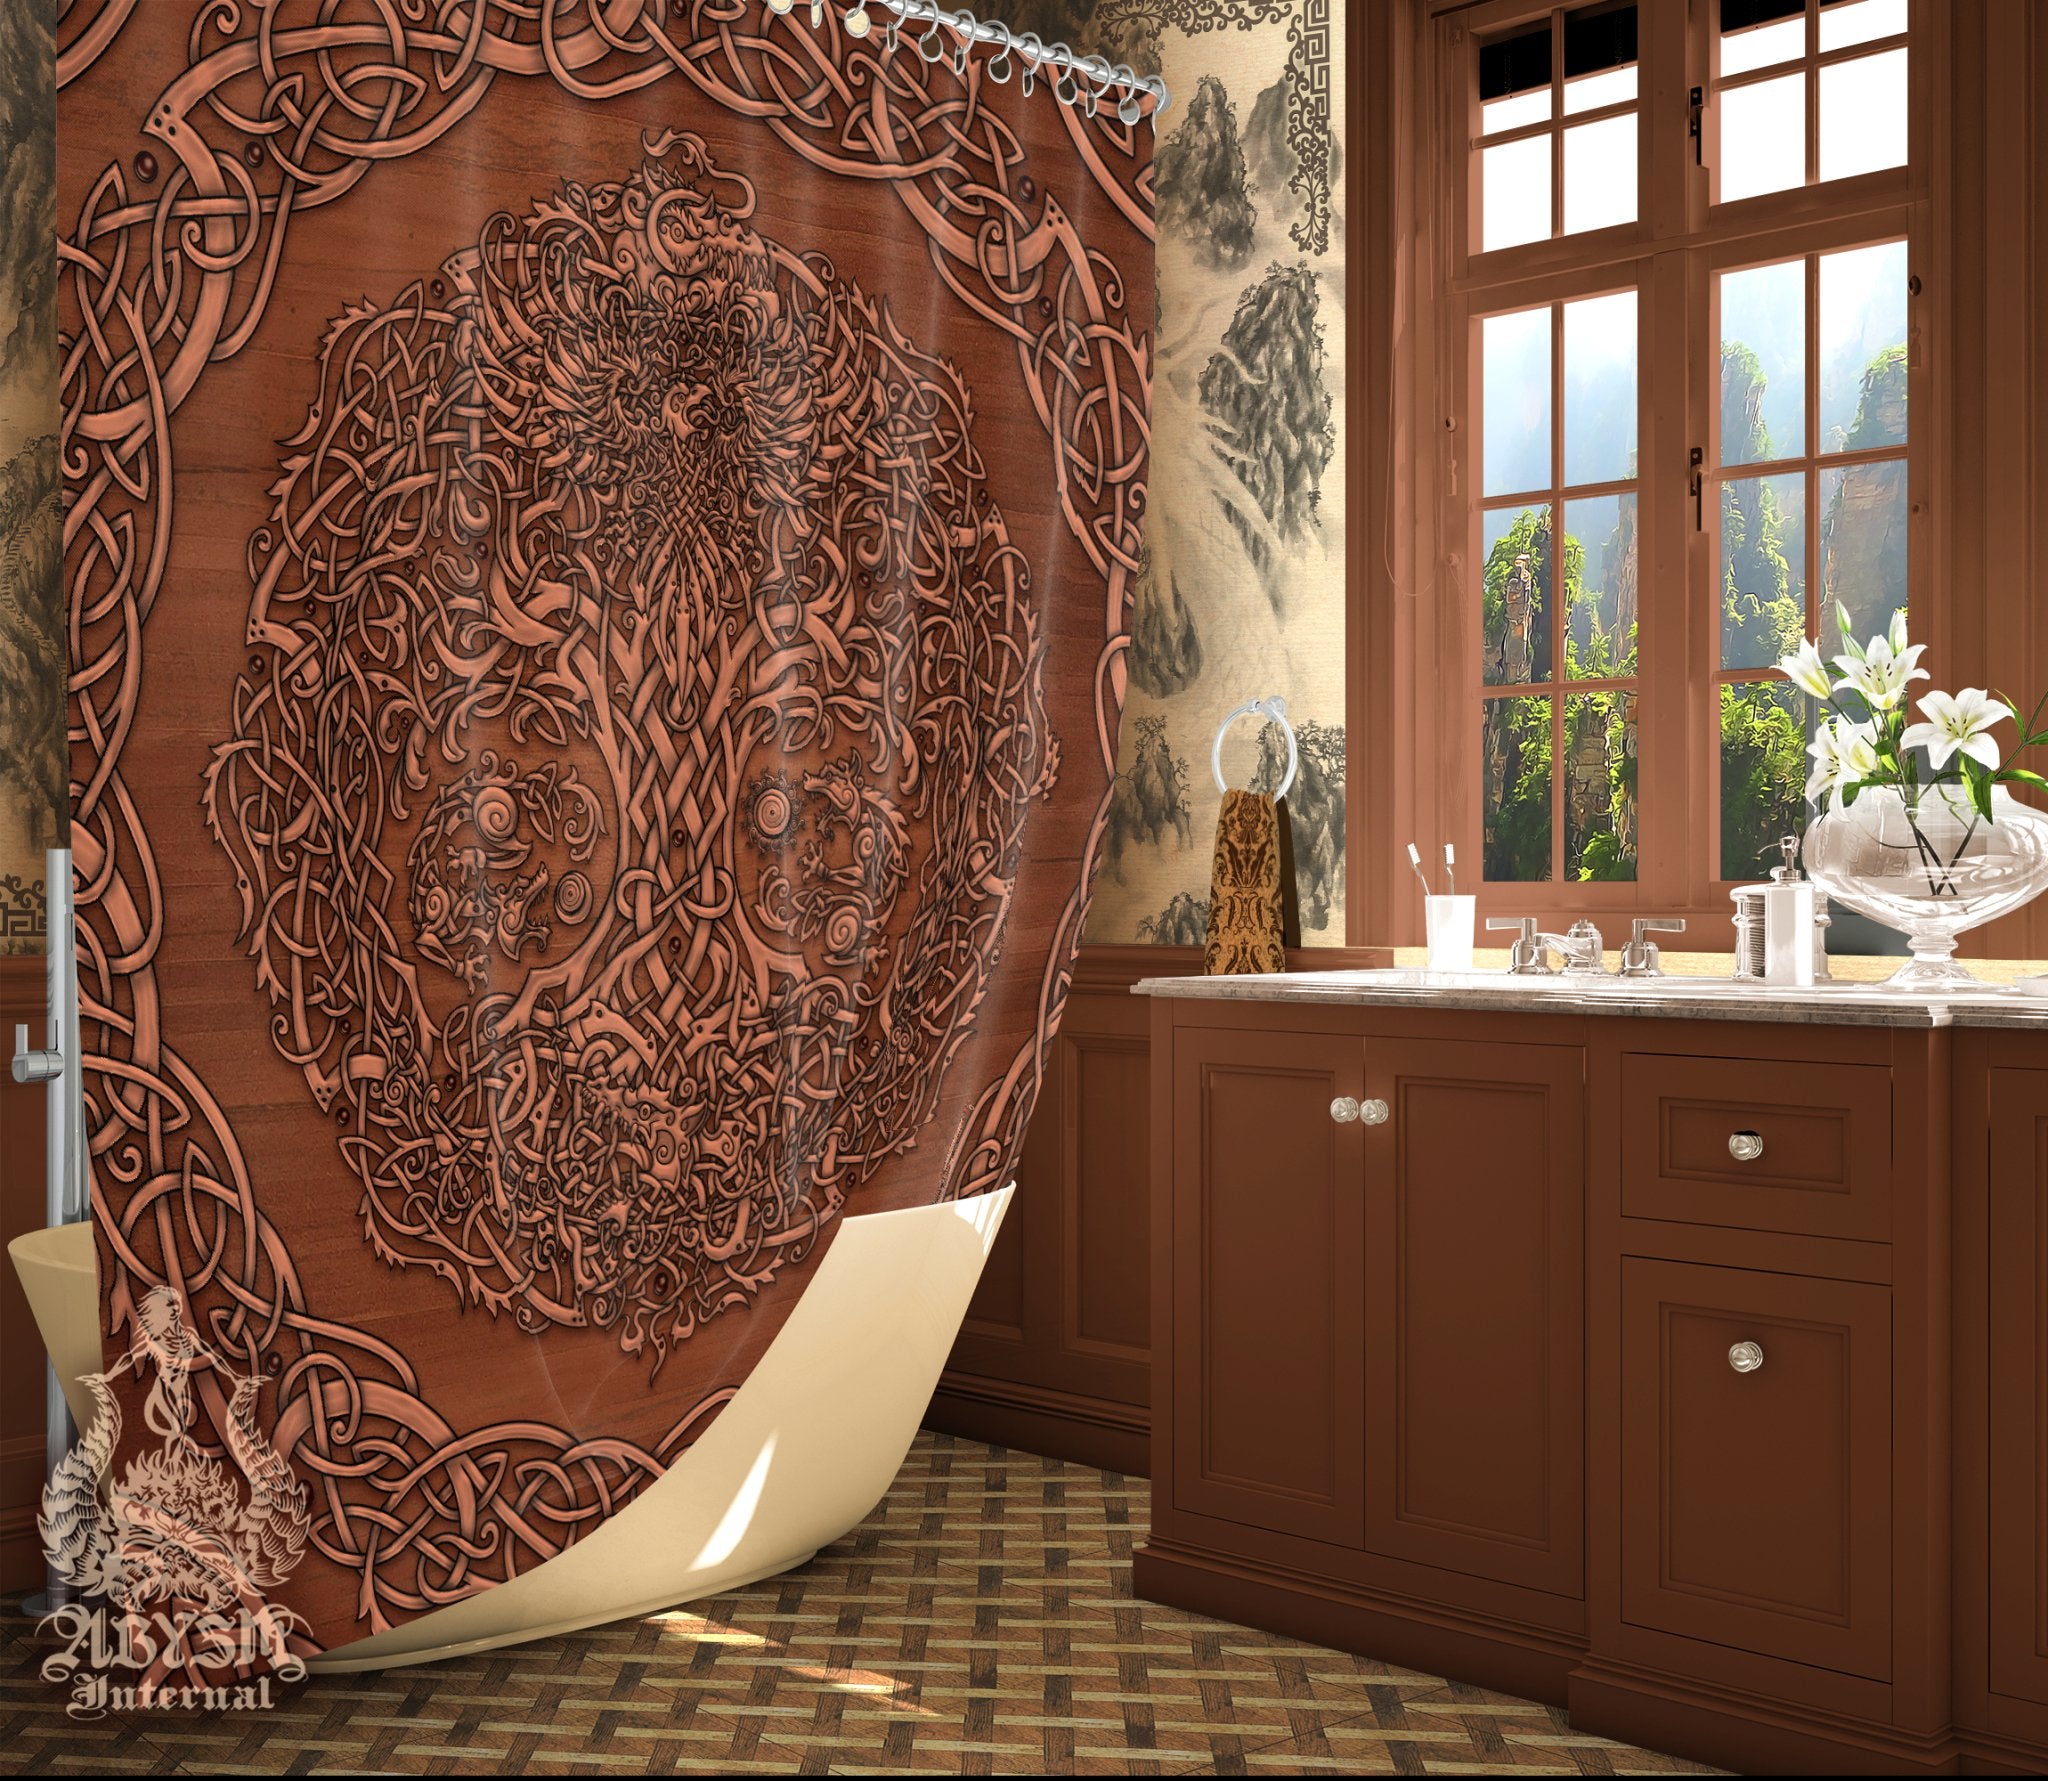 Yggdrasil Shower Curtain, 71x74 inches, Viking Bathroom Decor, Pagan Art, Norse Tree of Life, Beige Home Decor - Wood - Abysm Internal